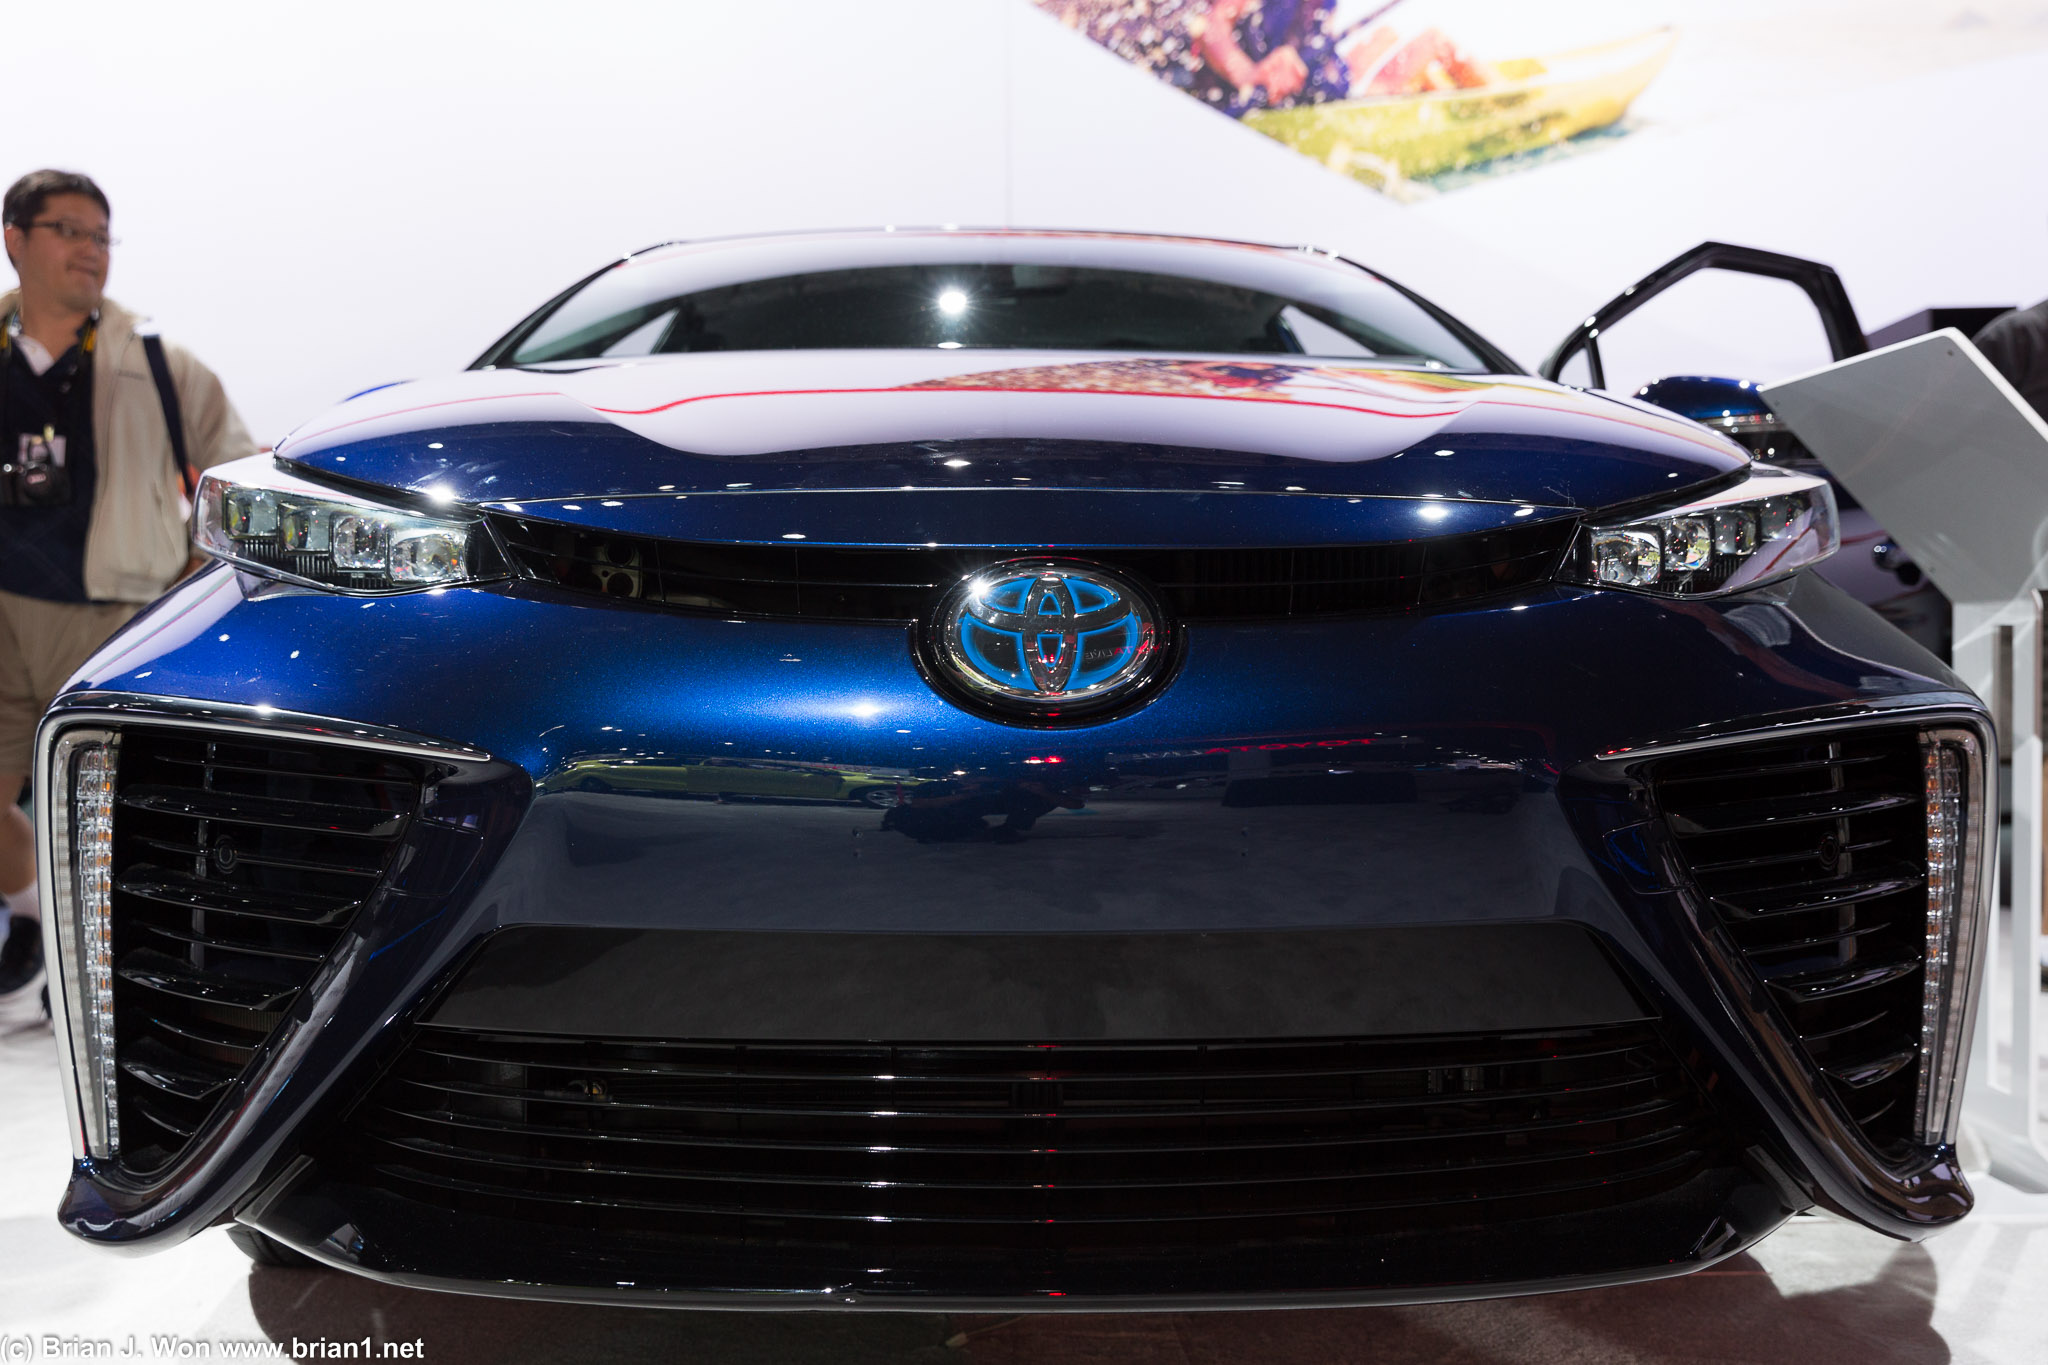 Toyota Mirai fuel cell vehicle.